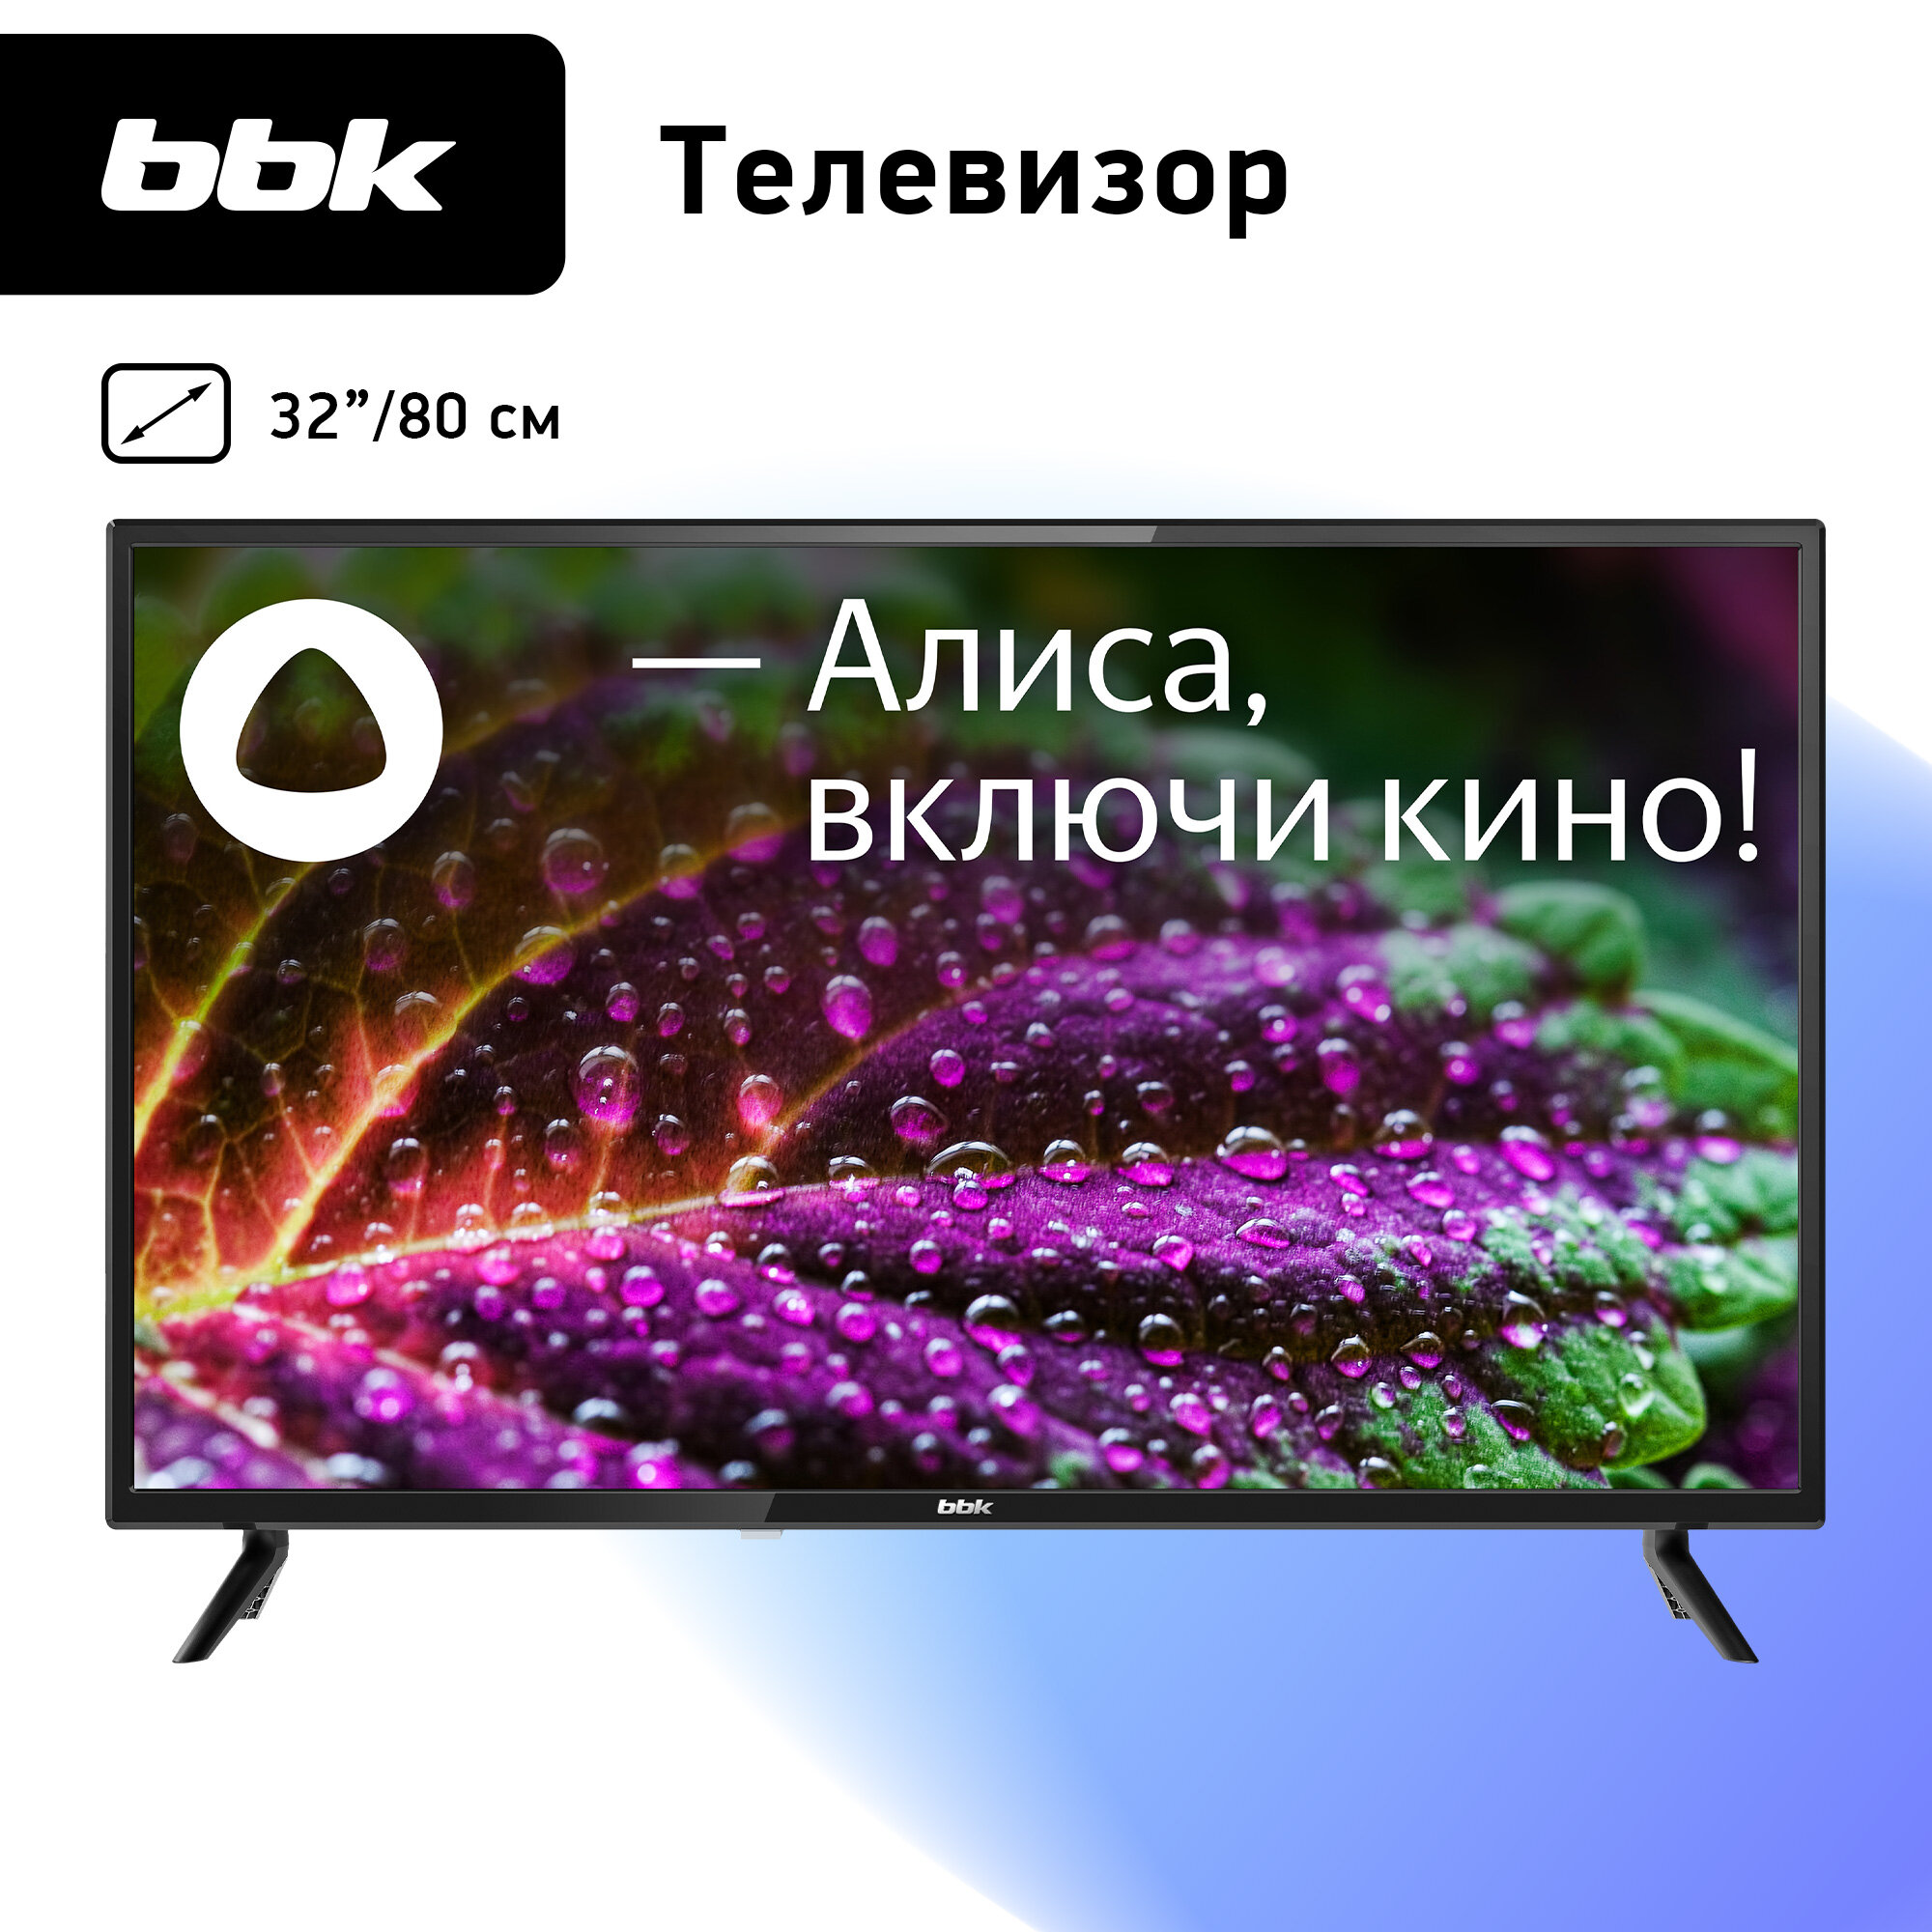 Телевизор BBK LED 31.5" 32LEX-7246/TS2C (B) Яндекс. ТВ черный HD 50Hz DVB-T2 DVB-C DVB-S2 USB WiFi Smart TV (RUS)